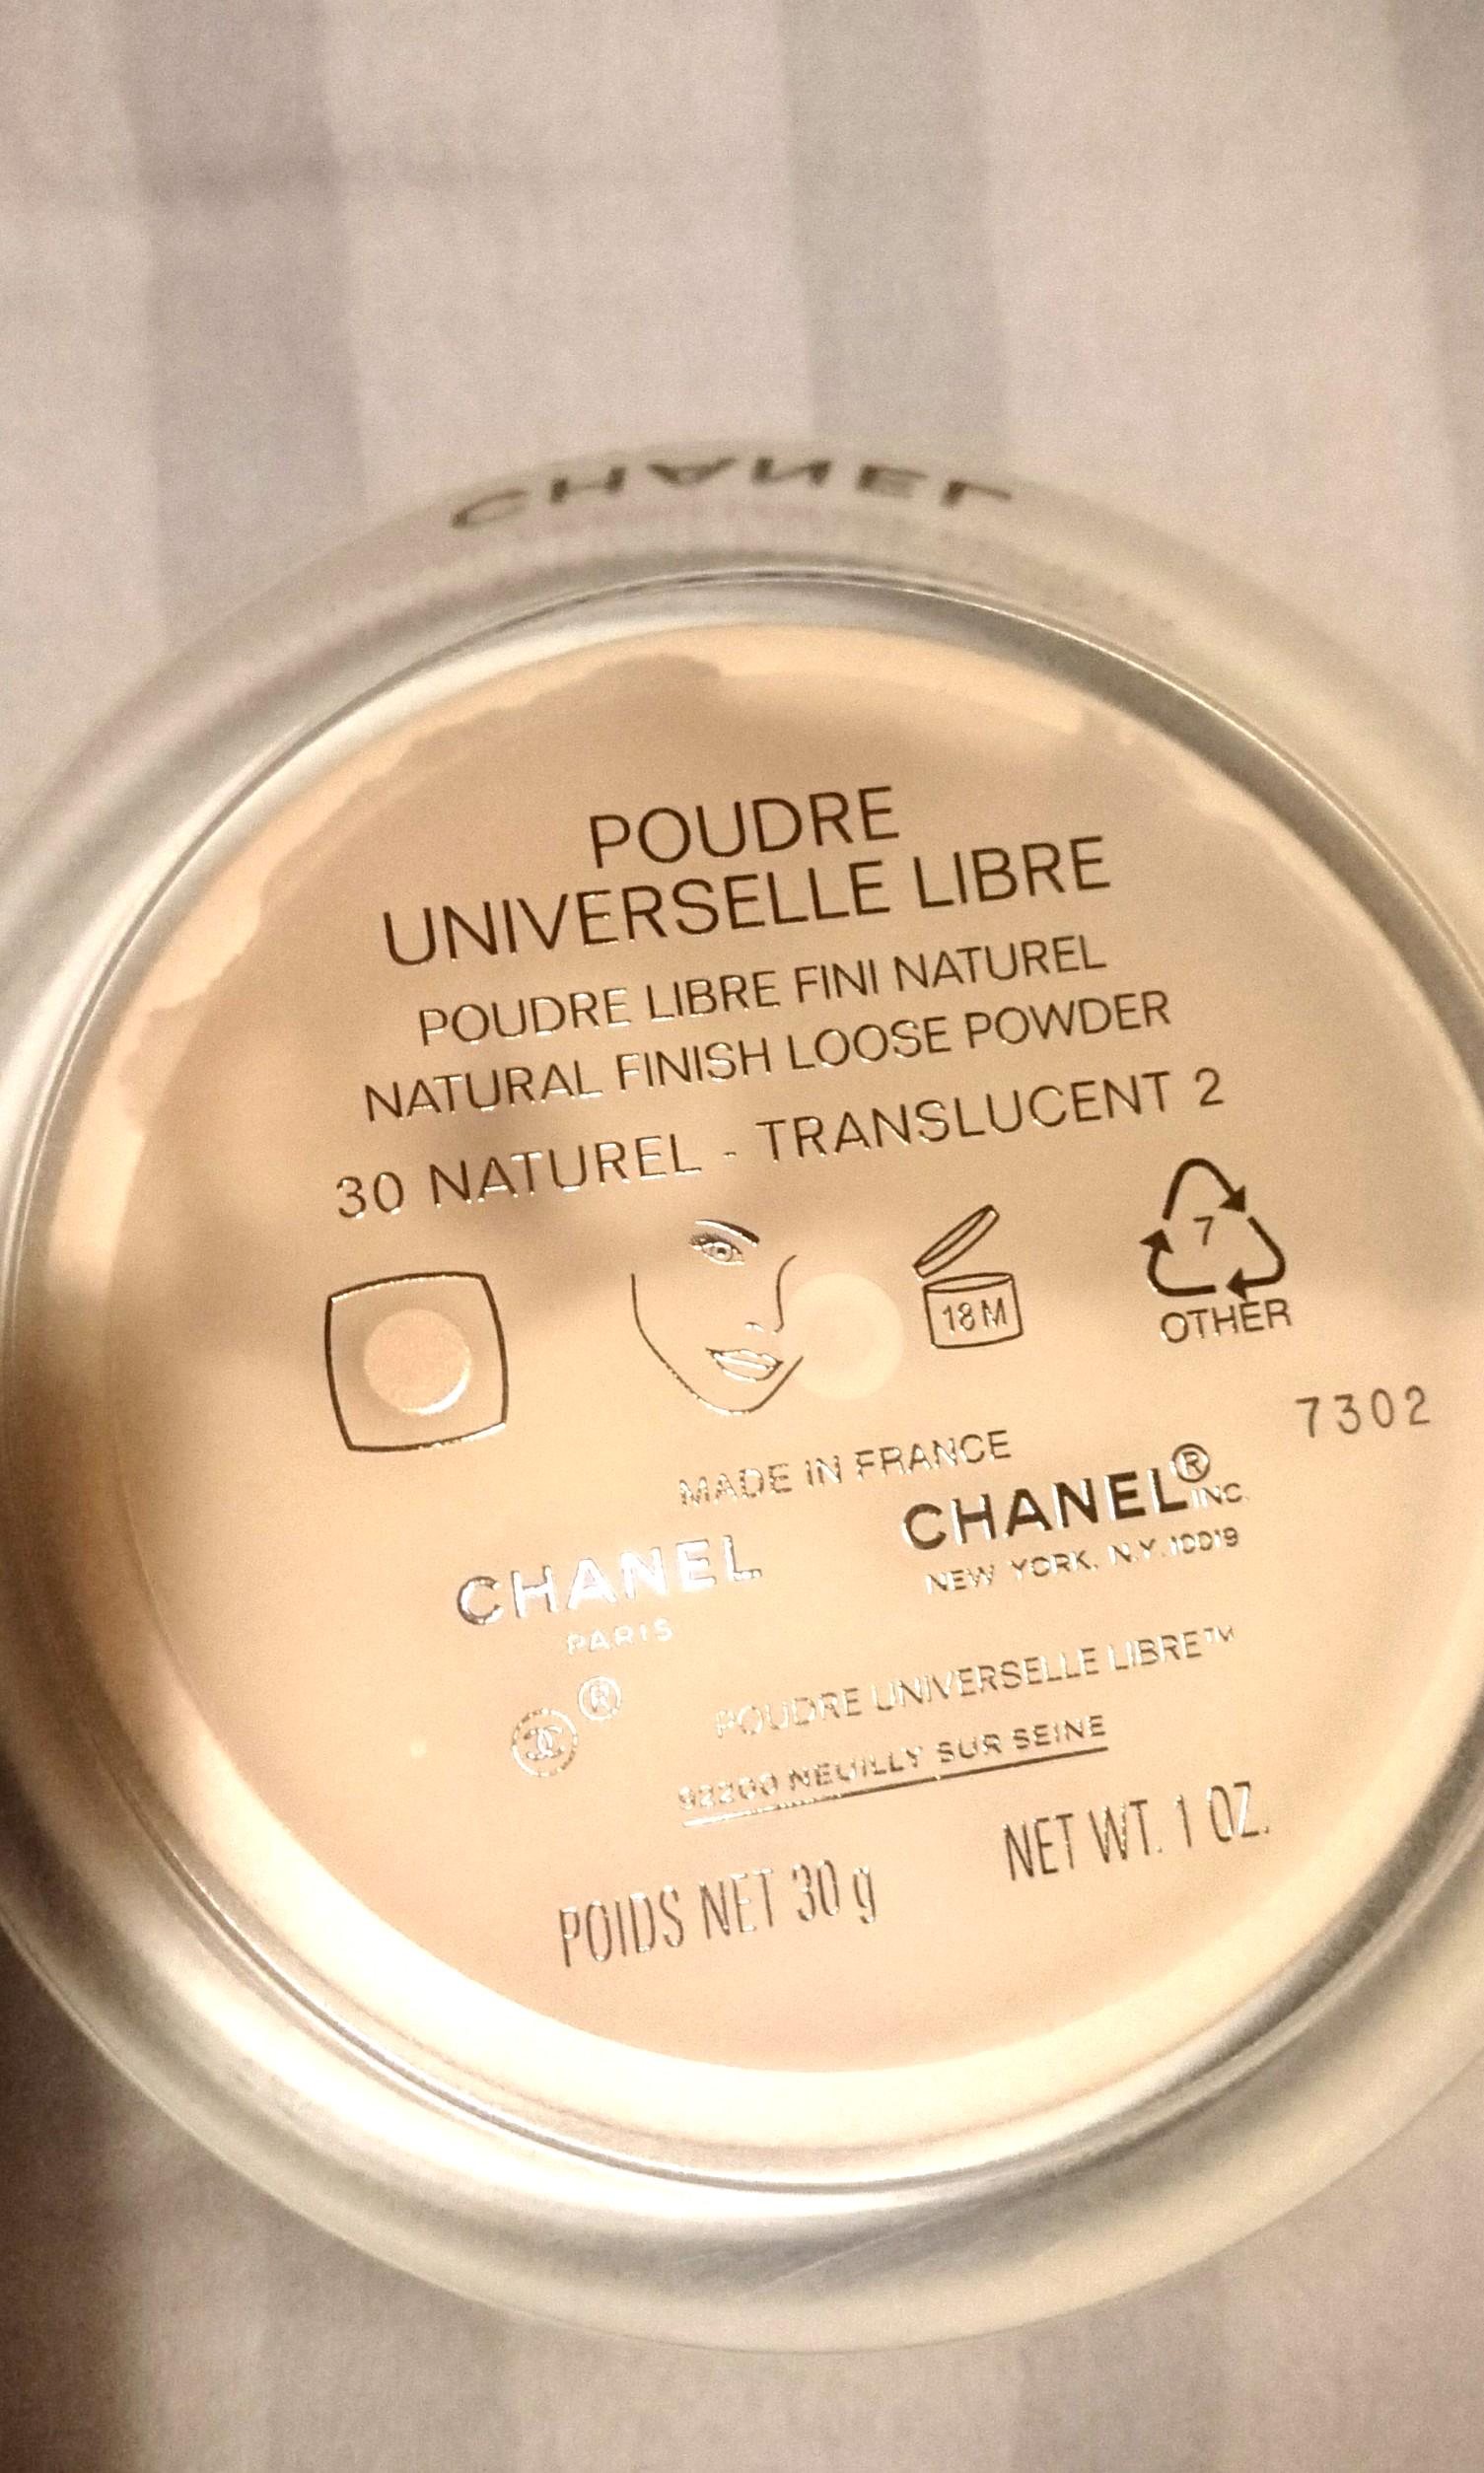 Chanel Poudre Universelle Libre Loose Powder 30 Gr 30